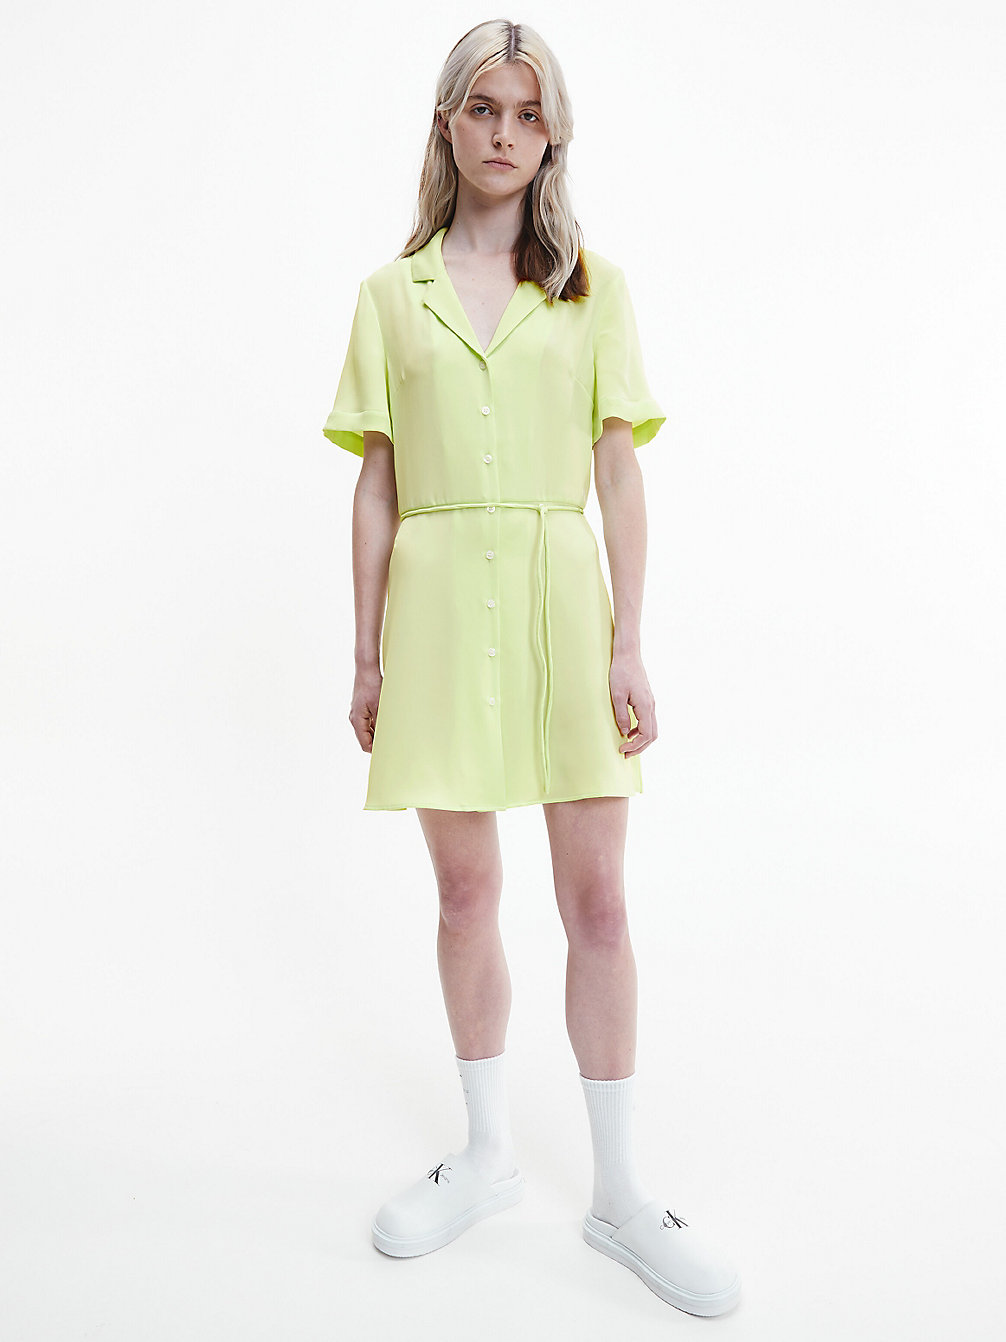 EXOTIC MINT Crepe Short Sleeve Shirt Dress undefined women Calvin Klein